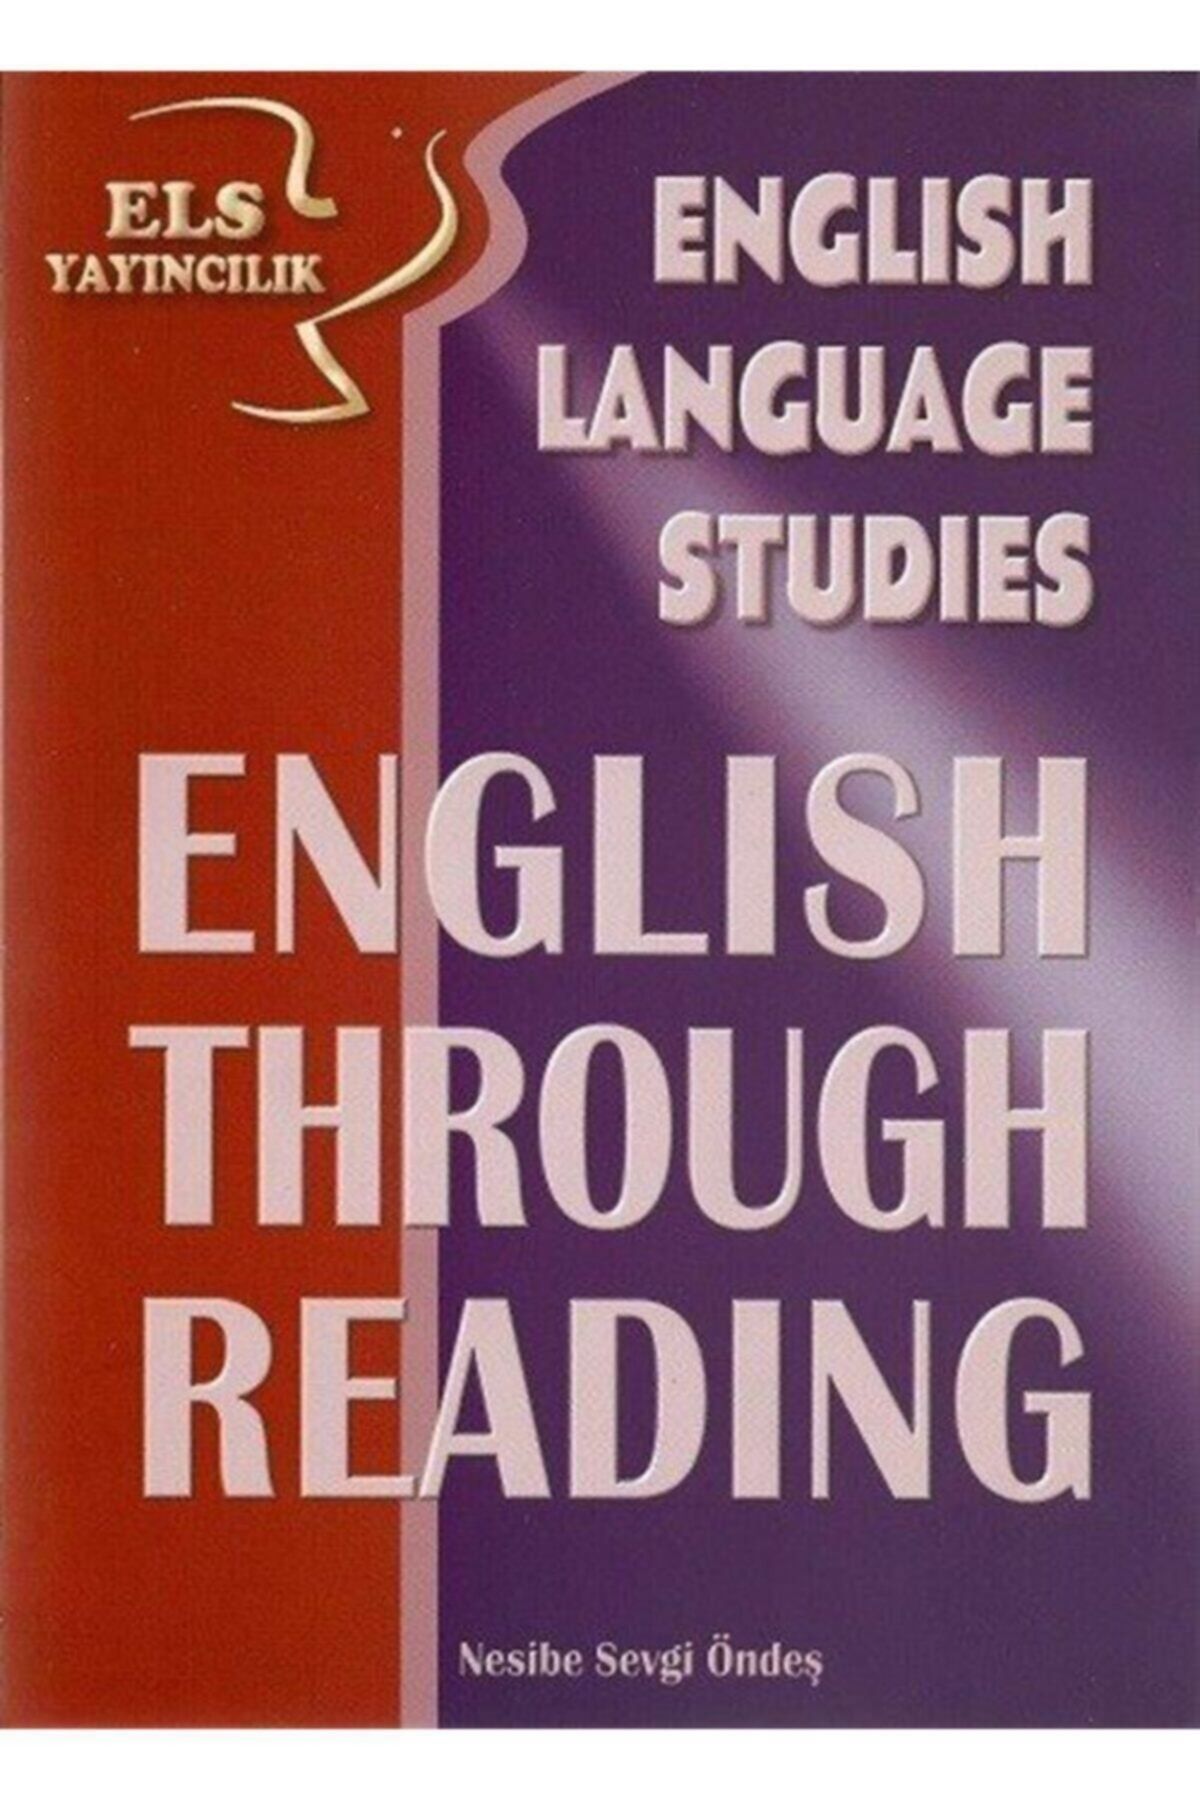 Els Yayıncılık Els English Language Studies English Through Reading